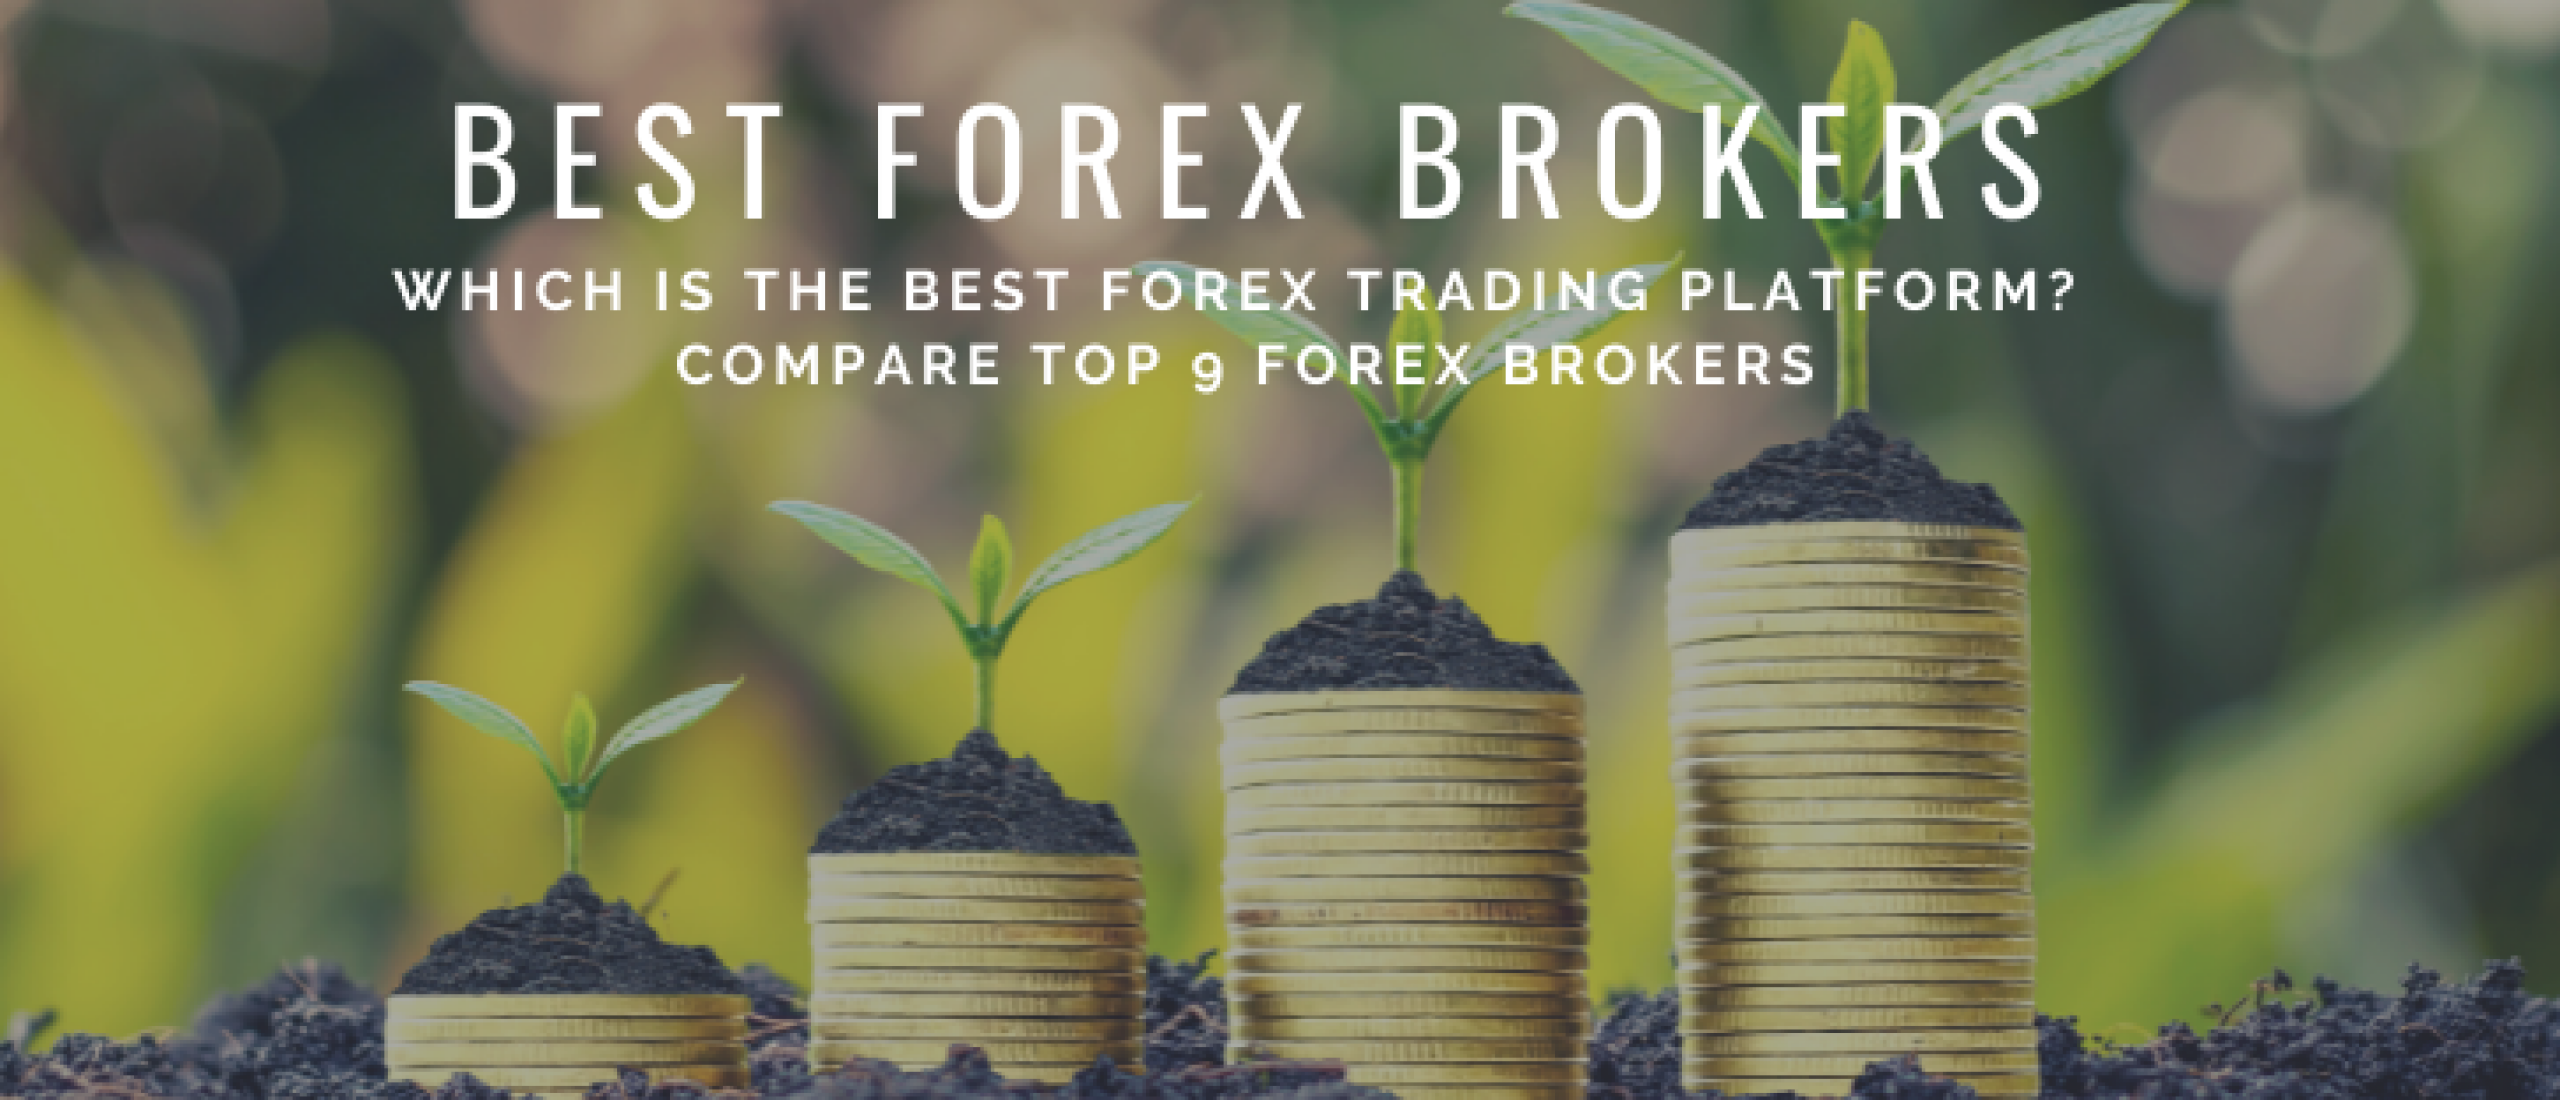 Best Forex Brokers: TOP 9 Forex Trading Platforms [2022]